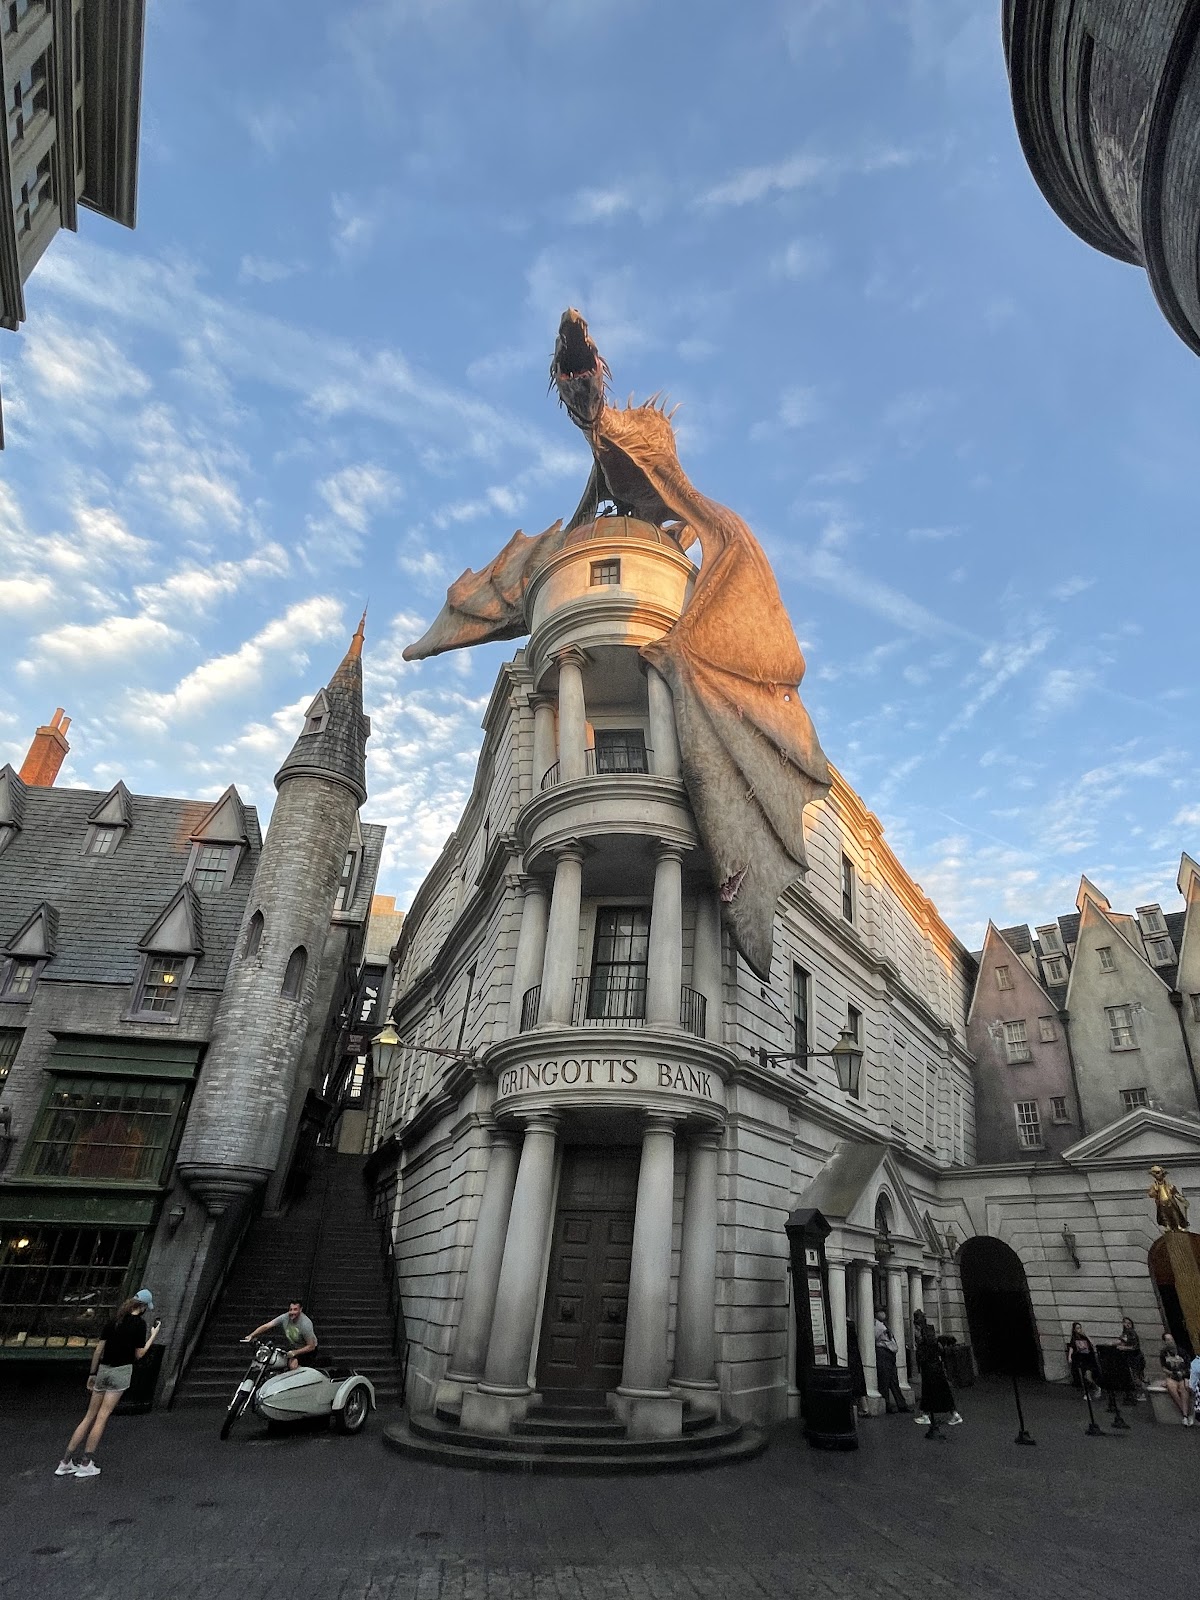 Escape from Gringotts Universal Studios Orlando Harry Potter